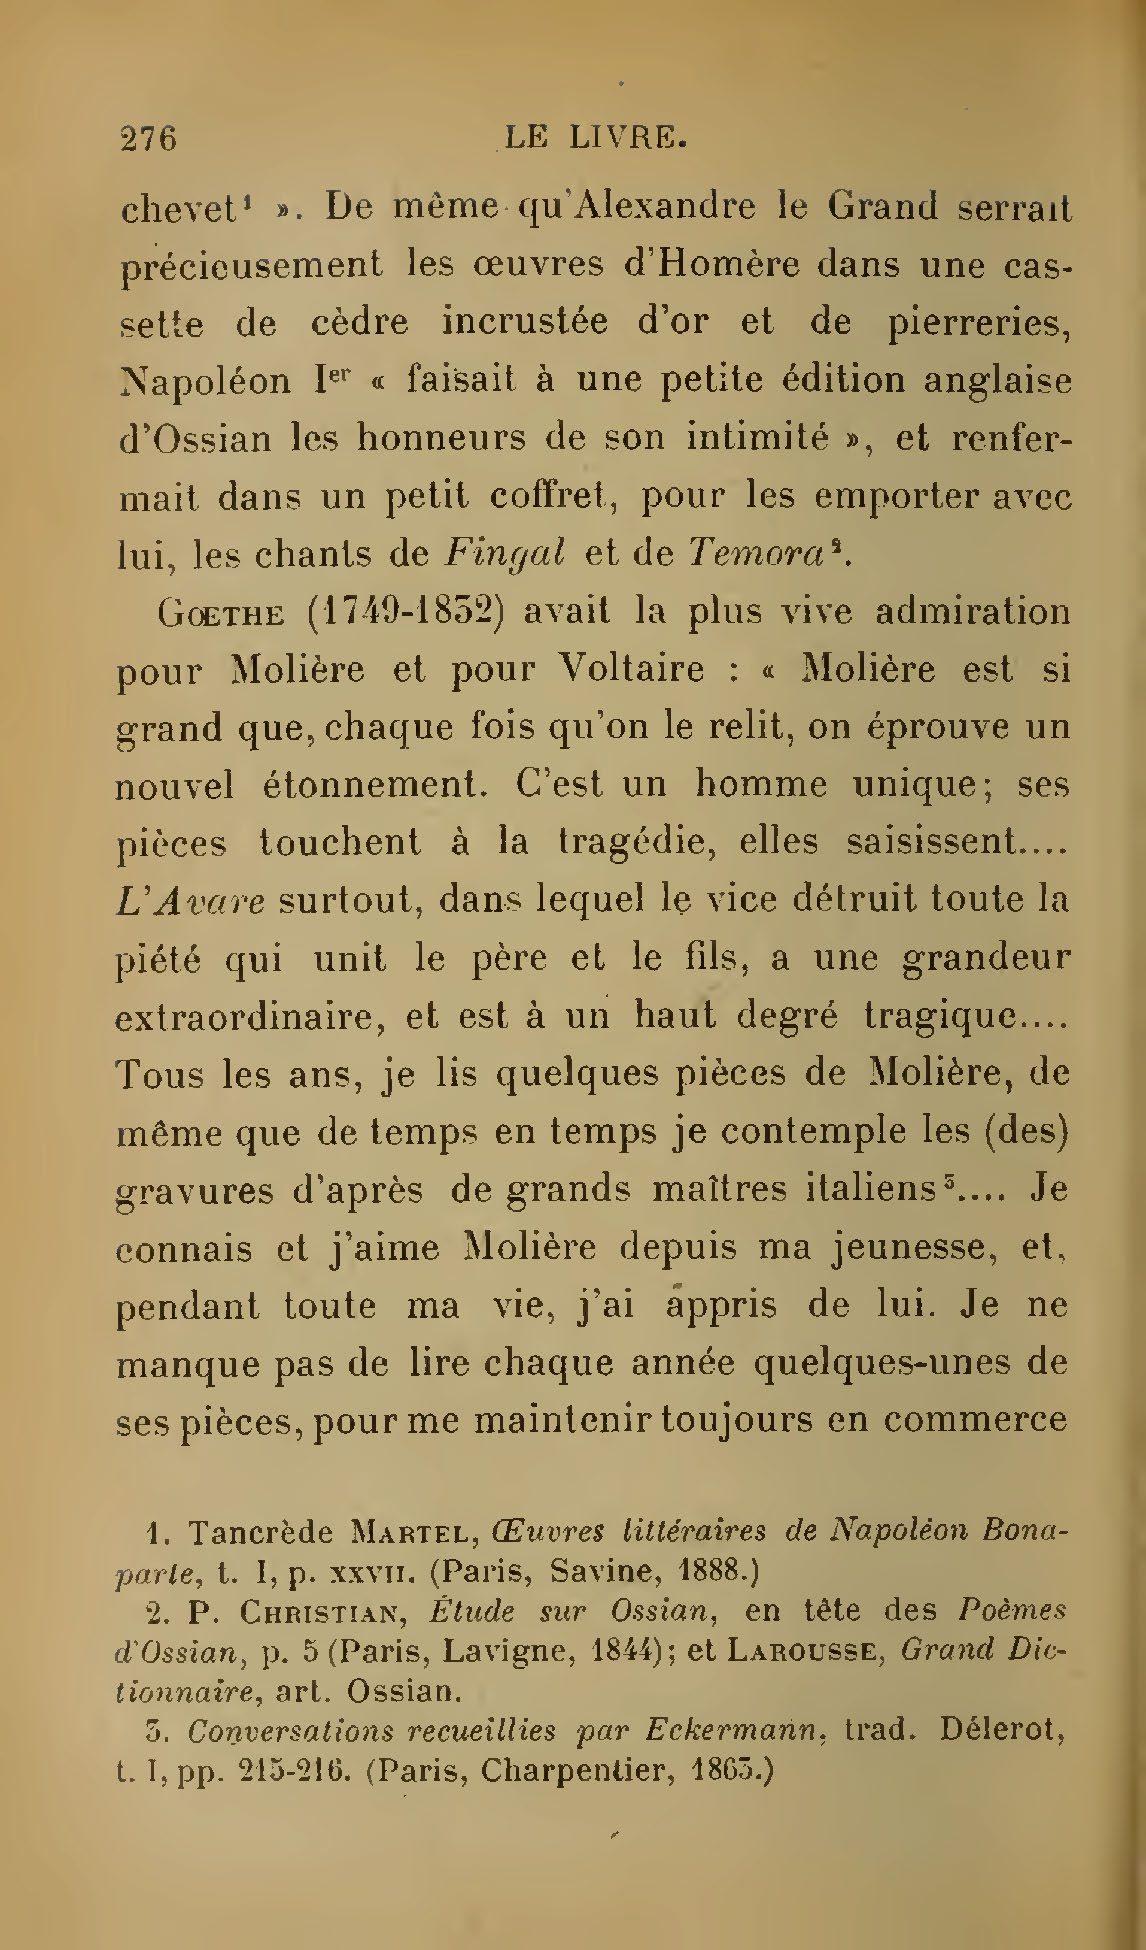 Albert Cim, Le Livre, t. I, p. 276.